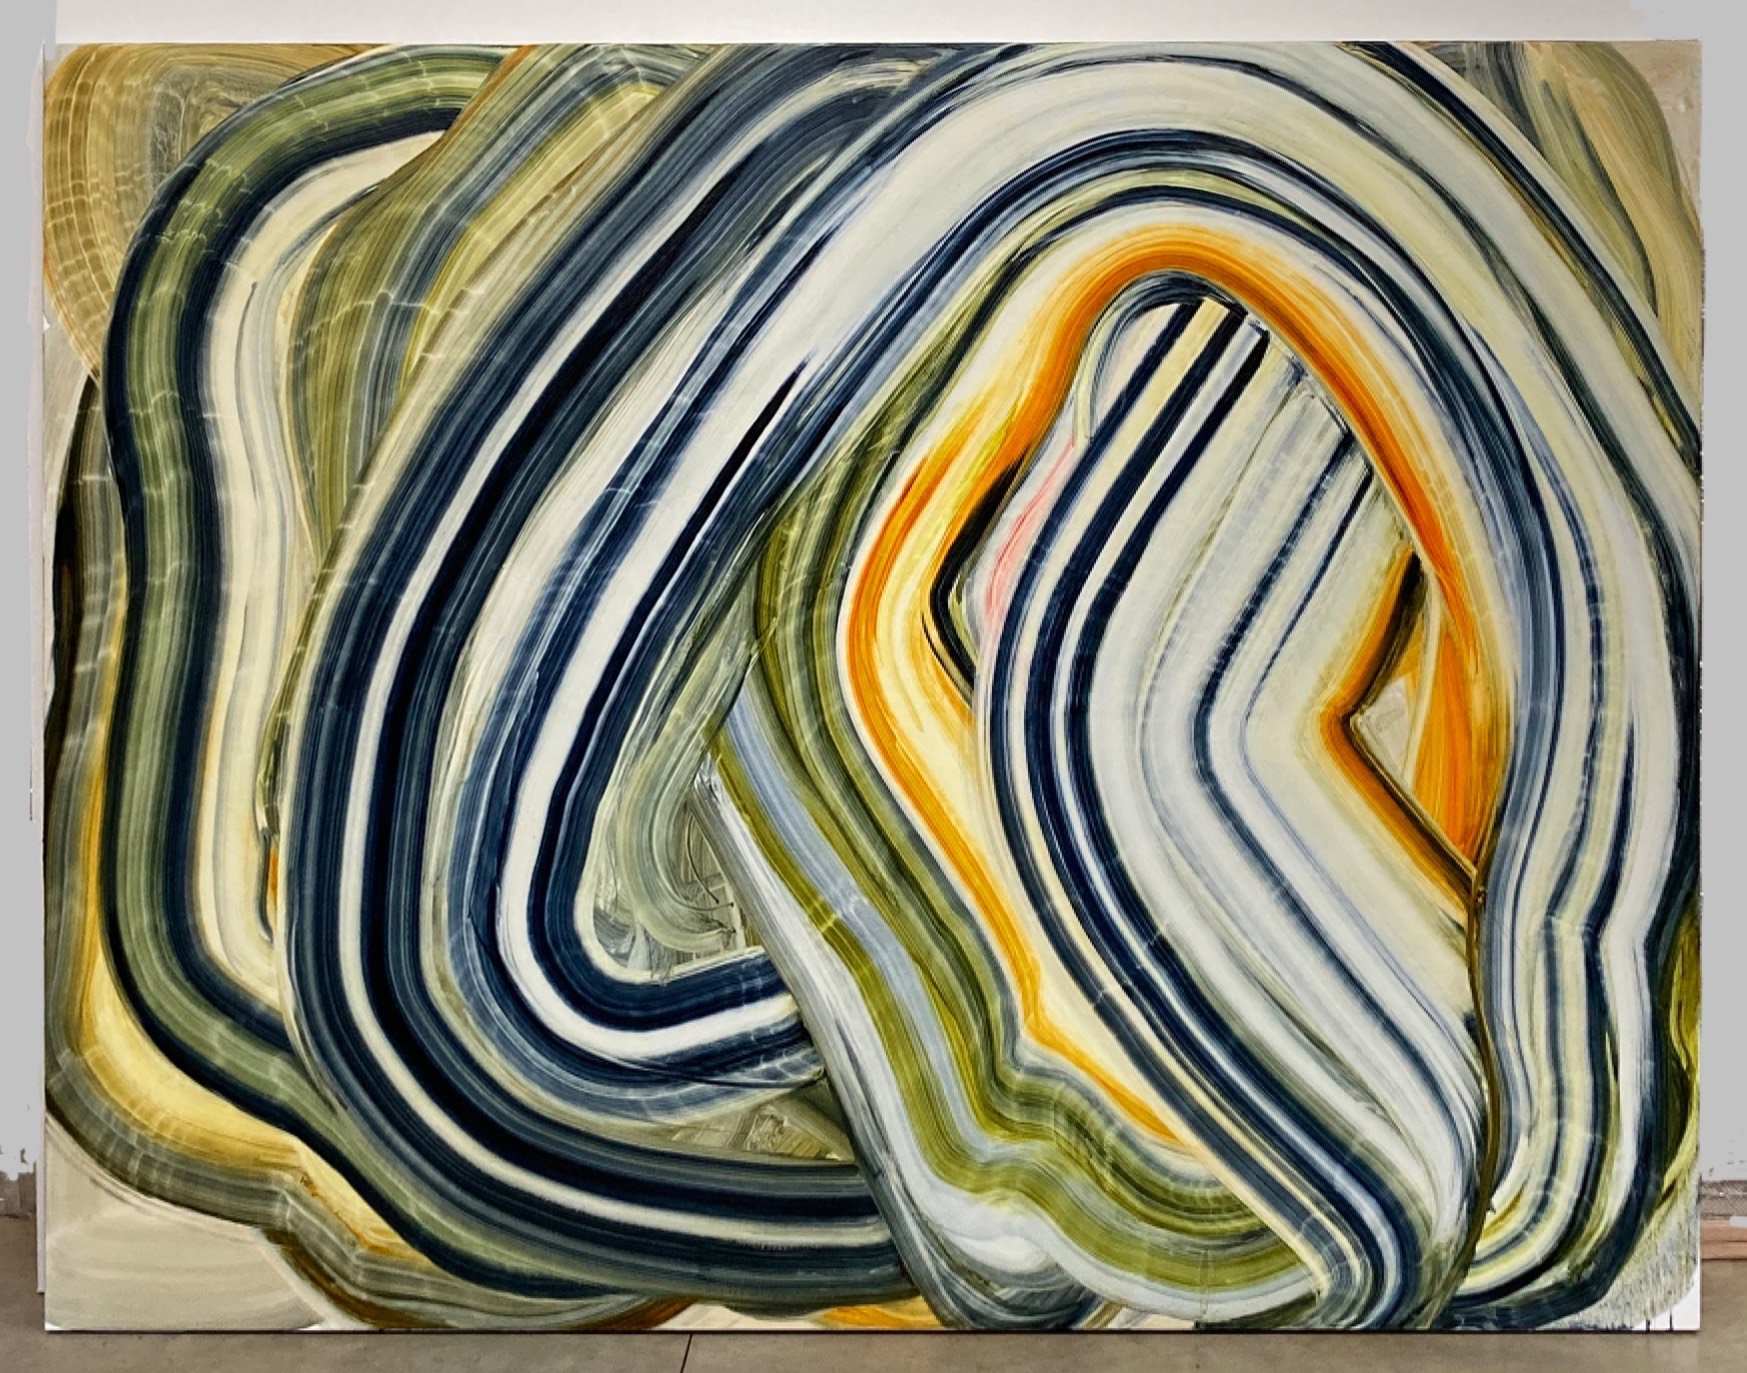  56x72 (142x183cm) oil on canvas, 2022 